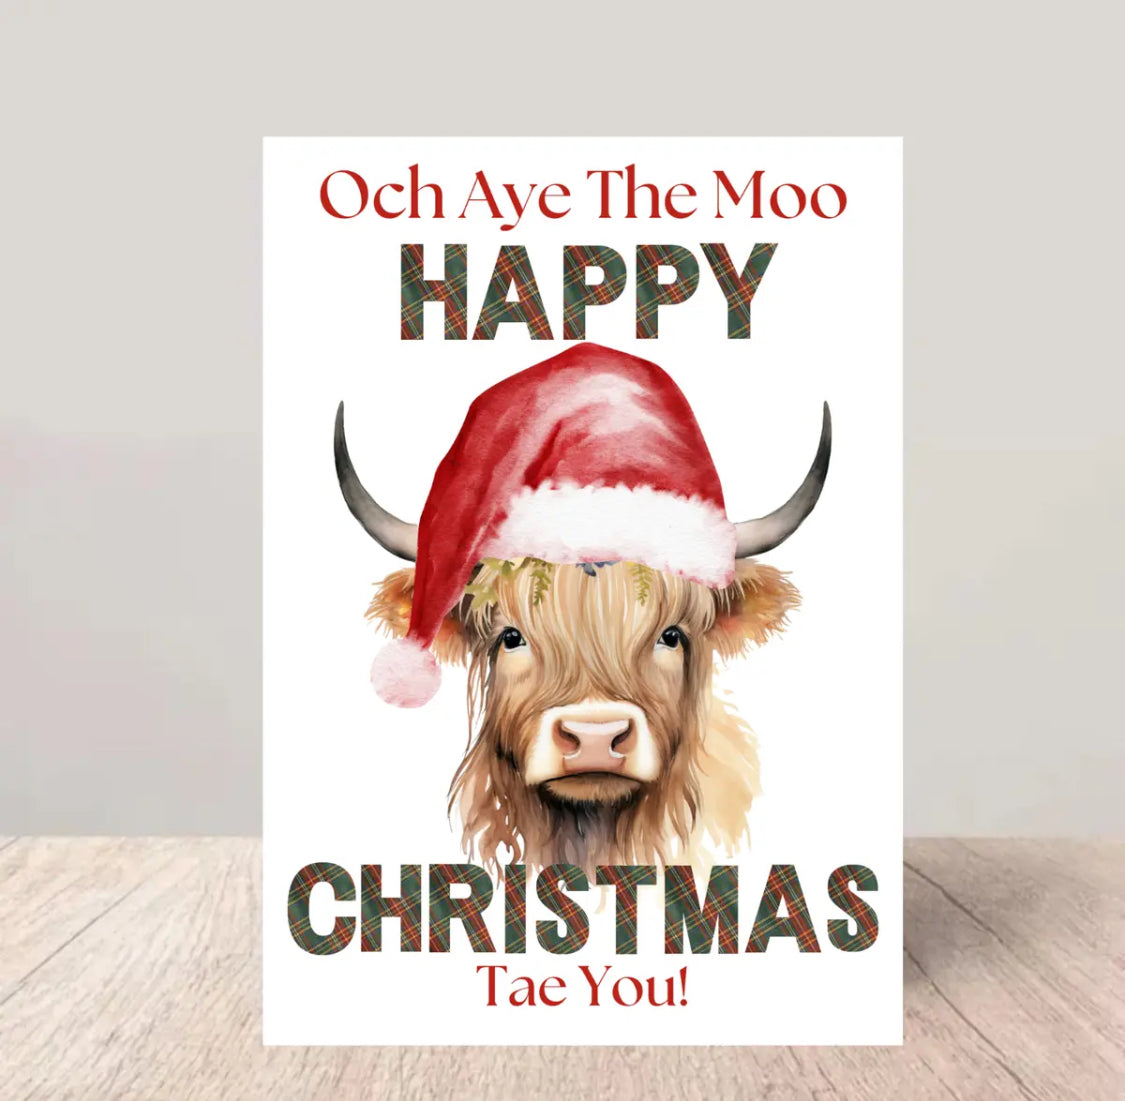 Scottish Highland Cow Christmas Card - Och Aye The Moo! Happy Christmas! By Glen Ogal